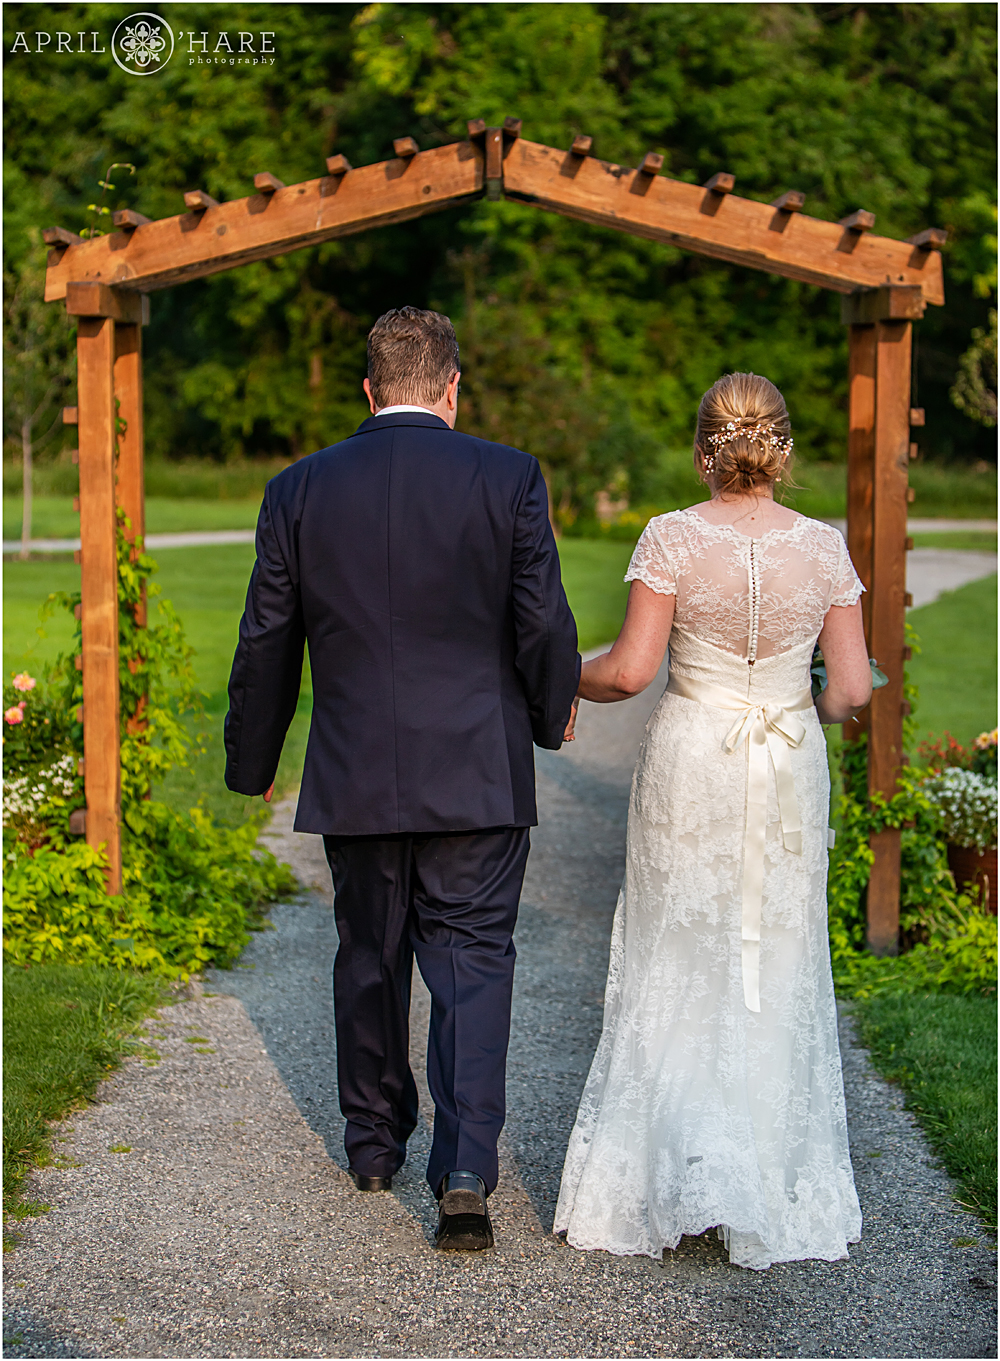 Bride and groom walk away after their Littleton Garden wedding ceremony